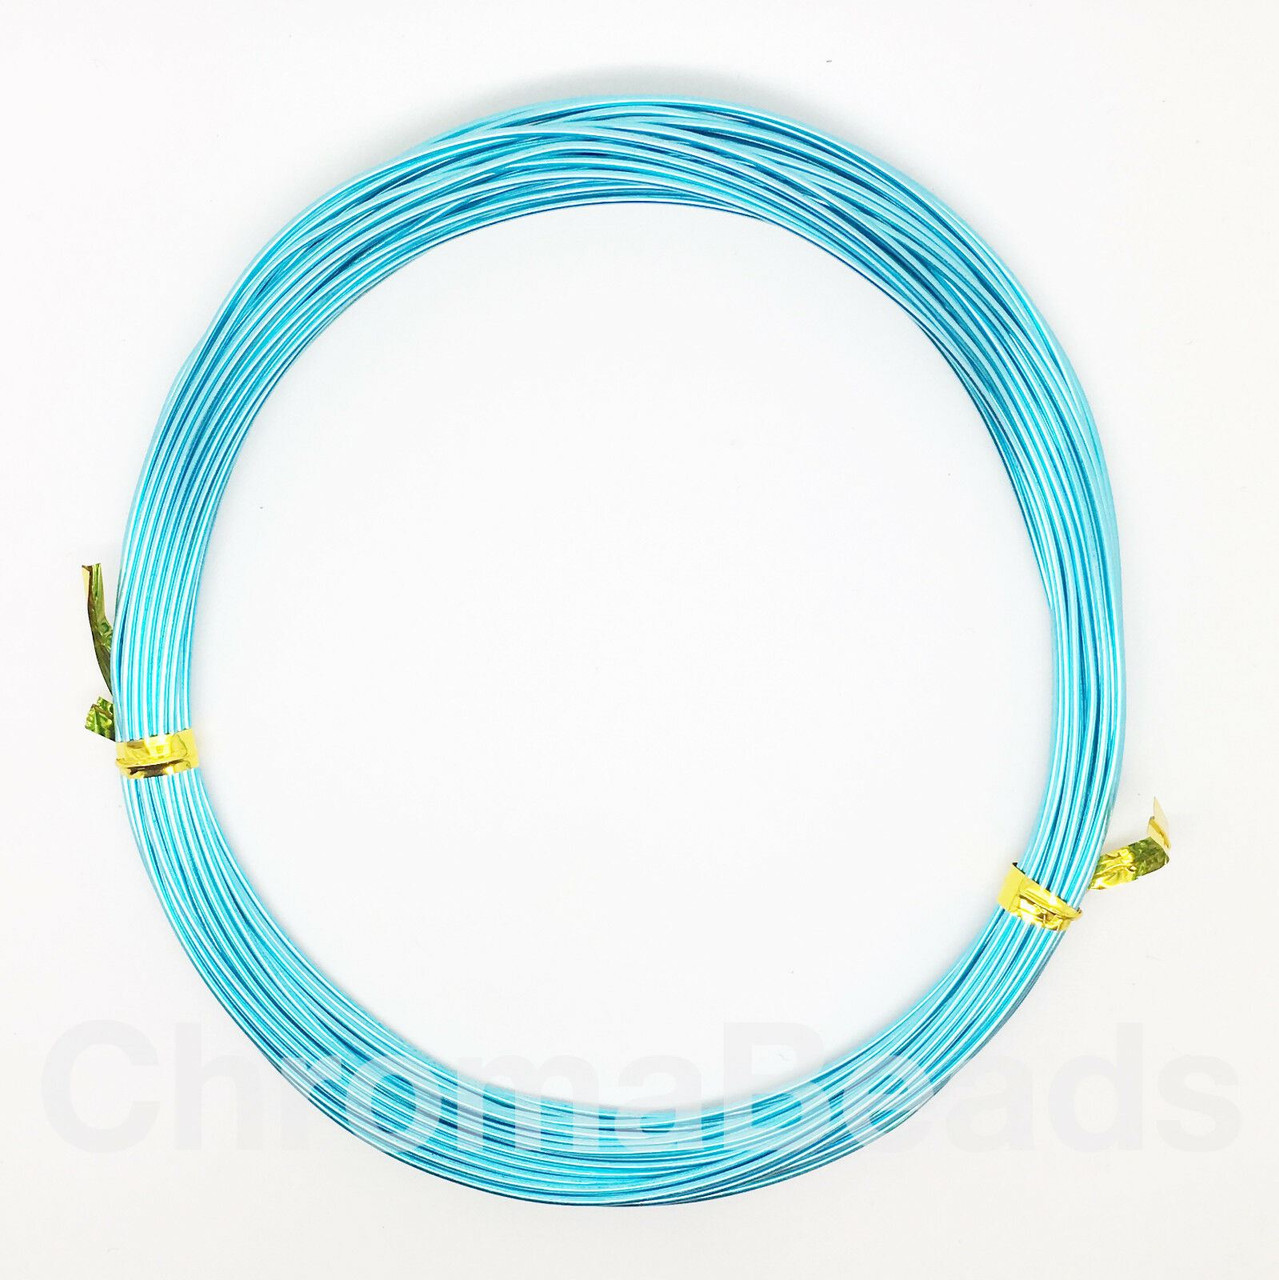 10m Aluminium Wire, 1.0mm thick - Light Turquoise